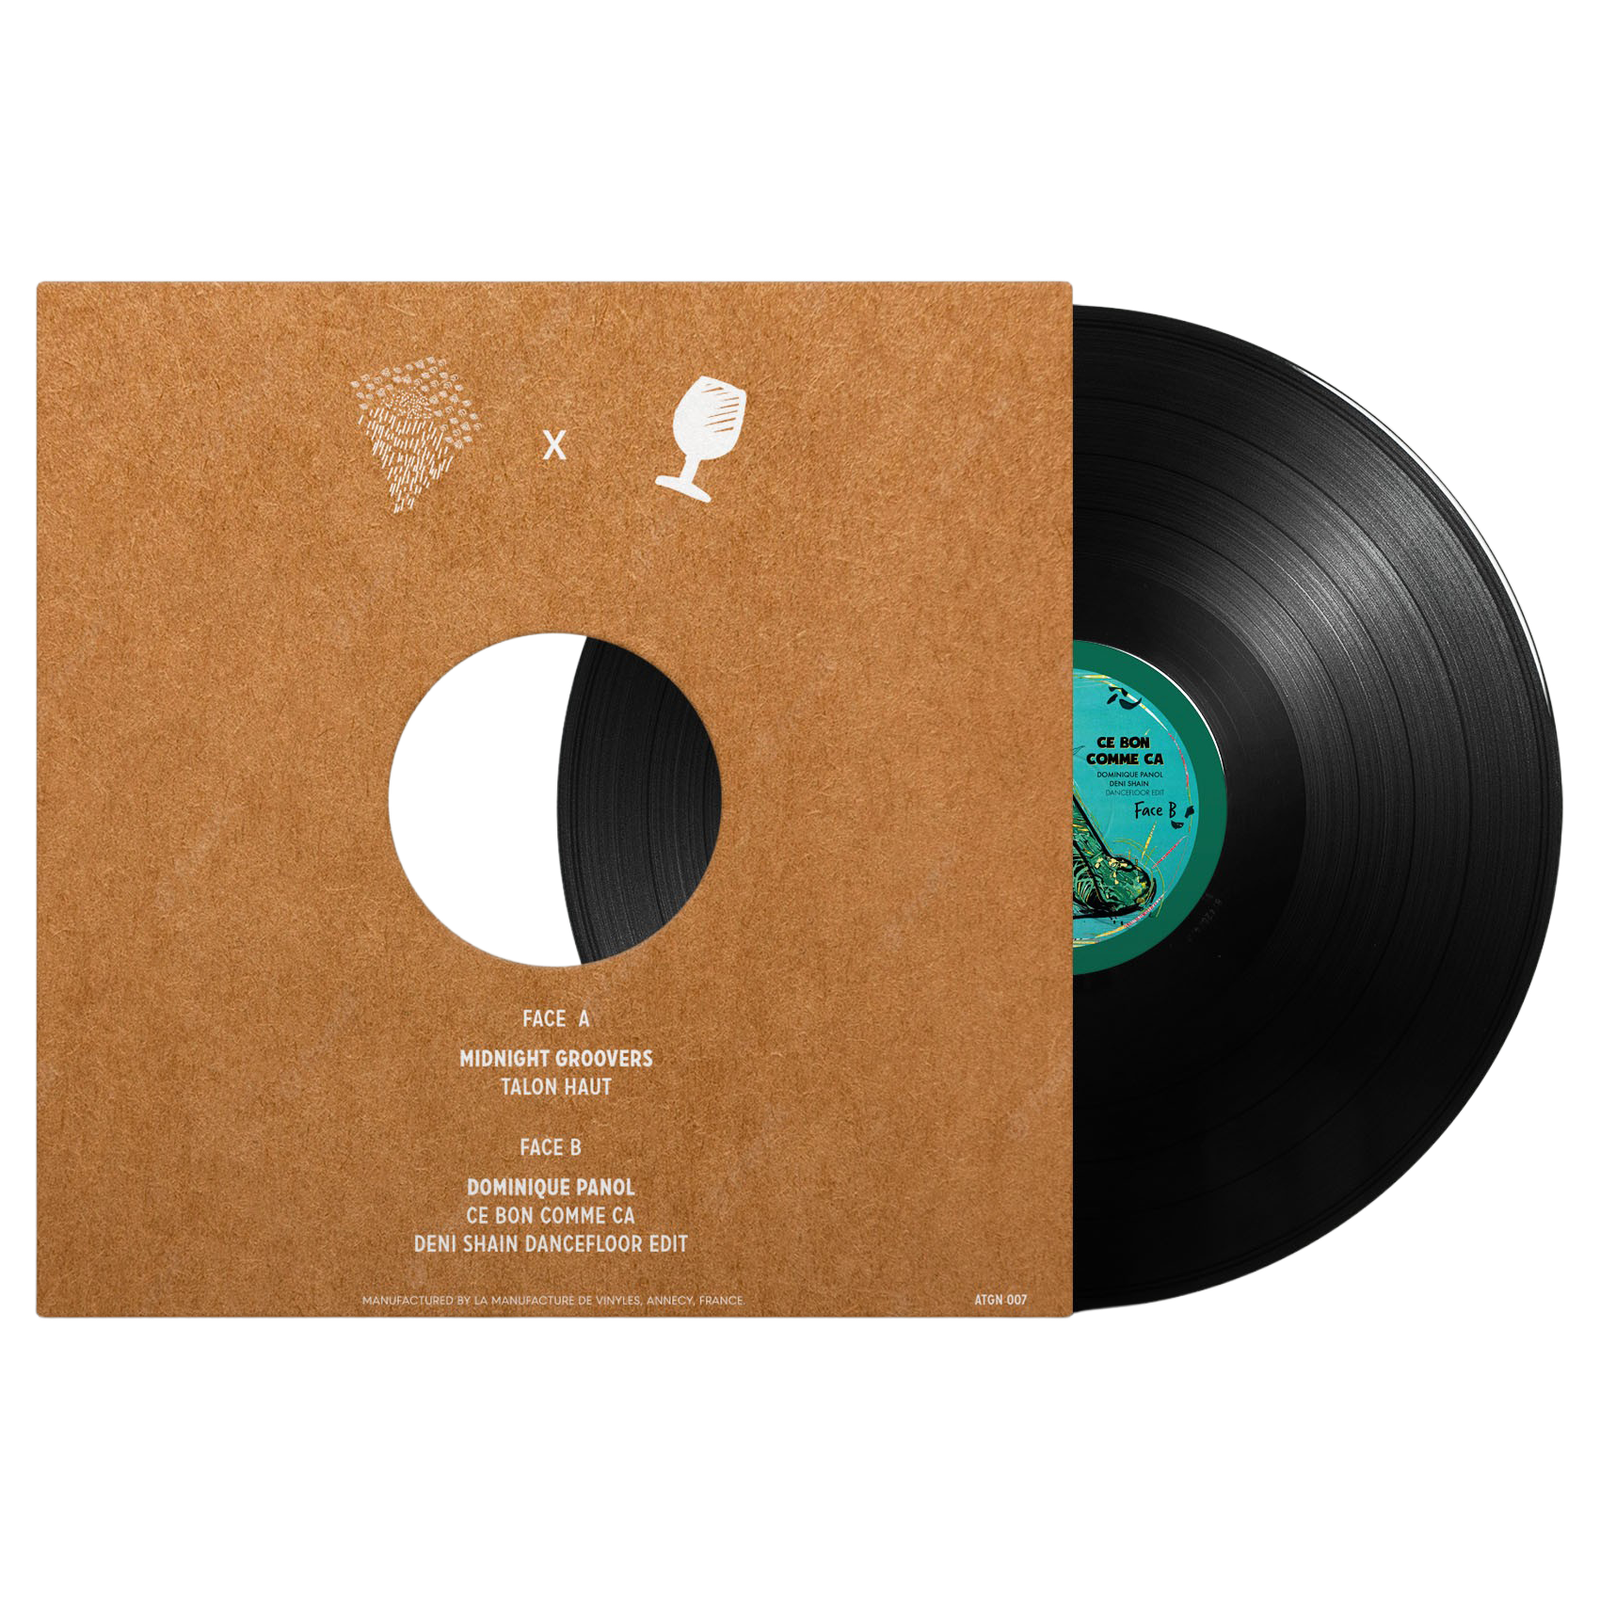 Le Verre Vole Atangana Records Limited Edition 12 Vinyl Black-0